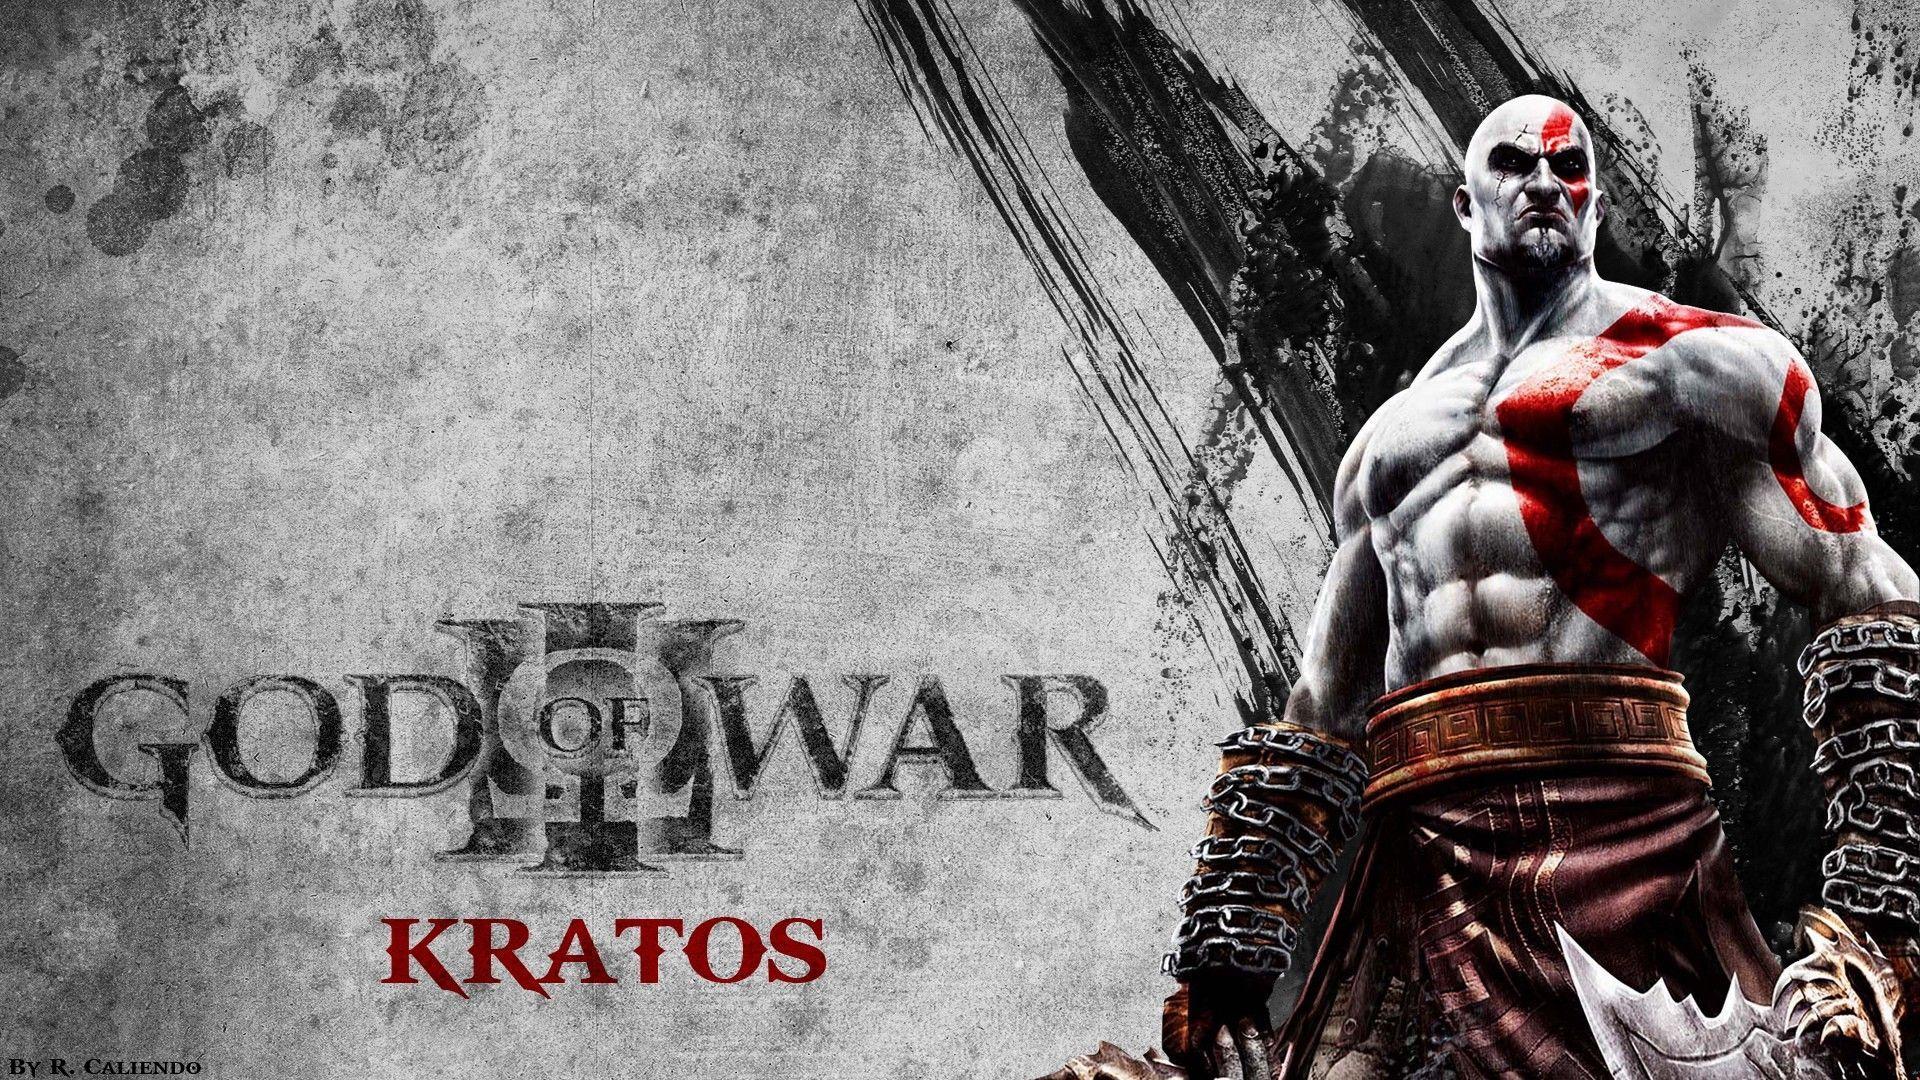 God Of War 3 Kratos Wallpaper Full HD rR. God of war, Kratos